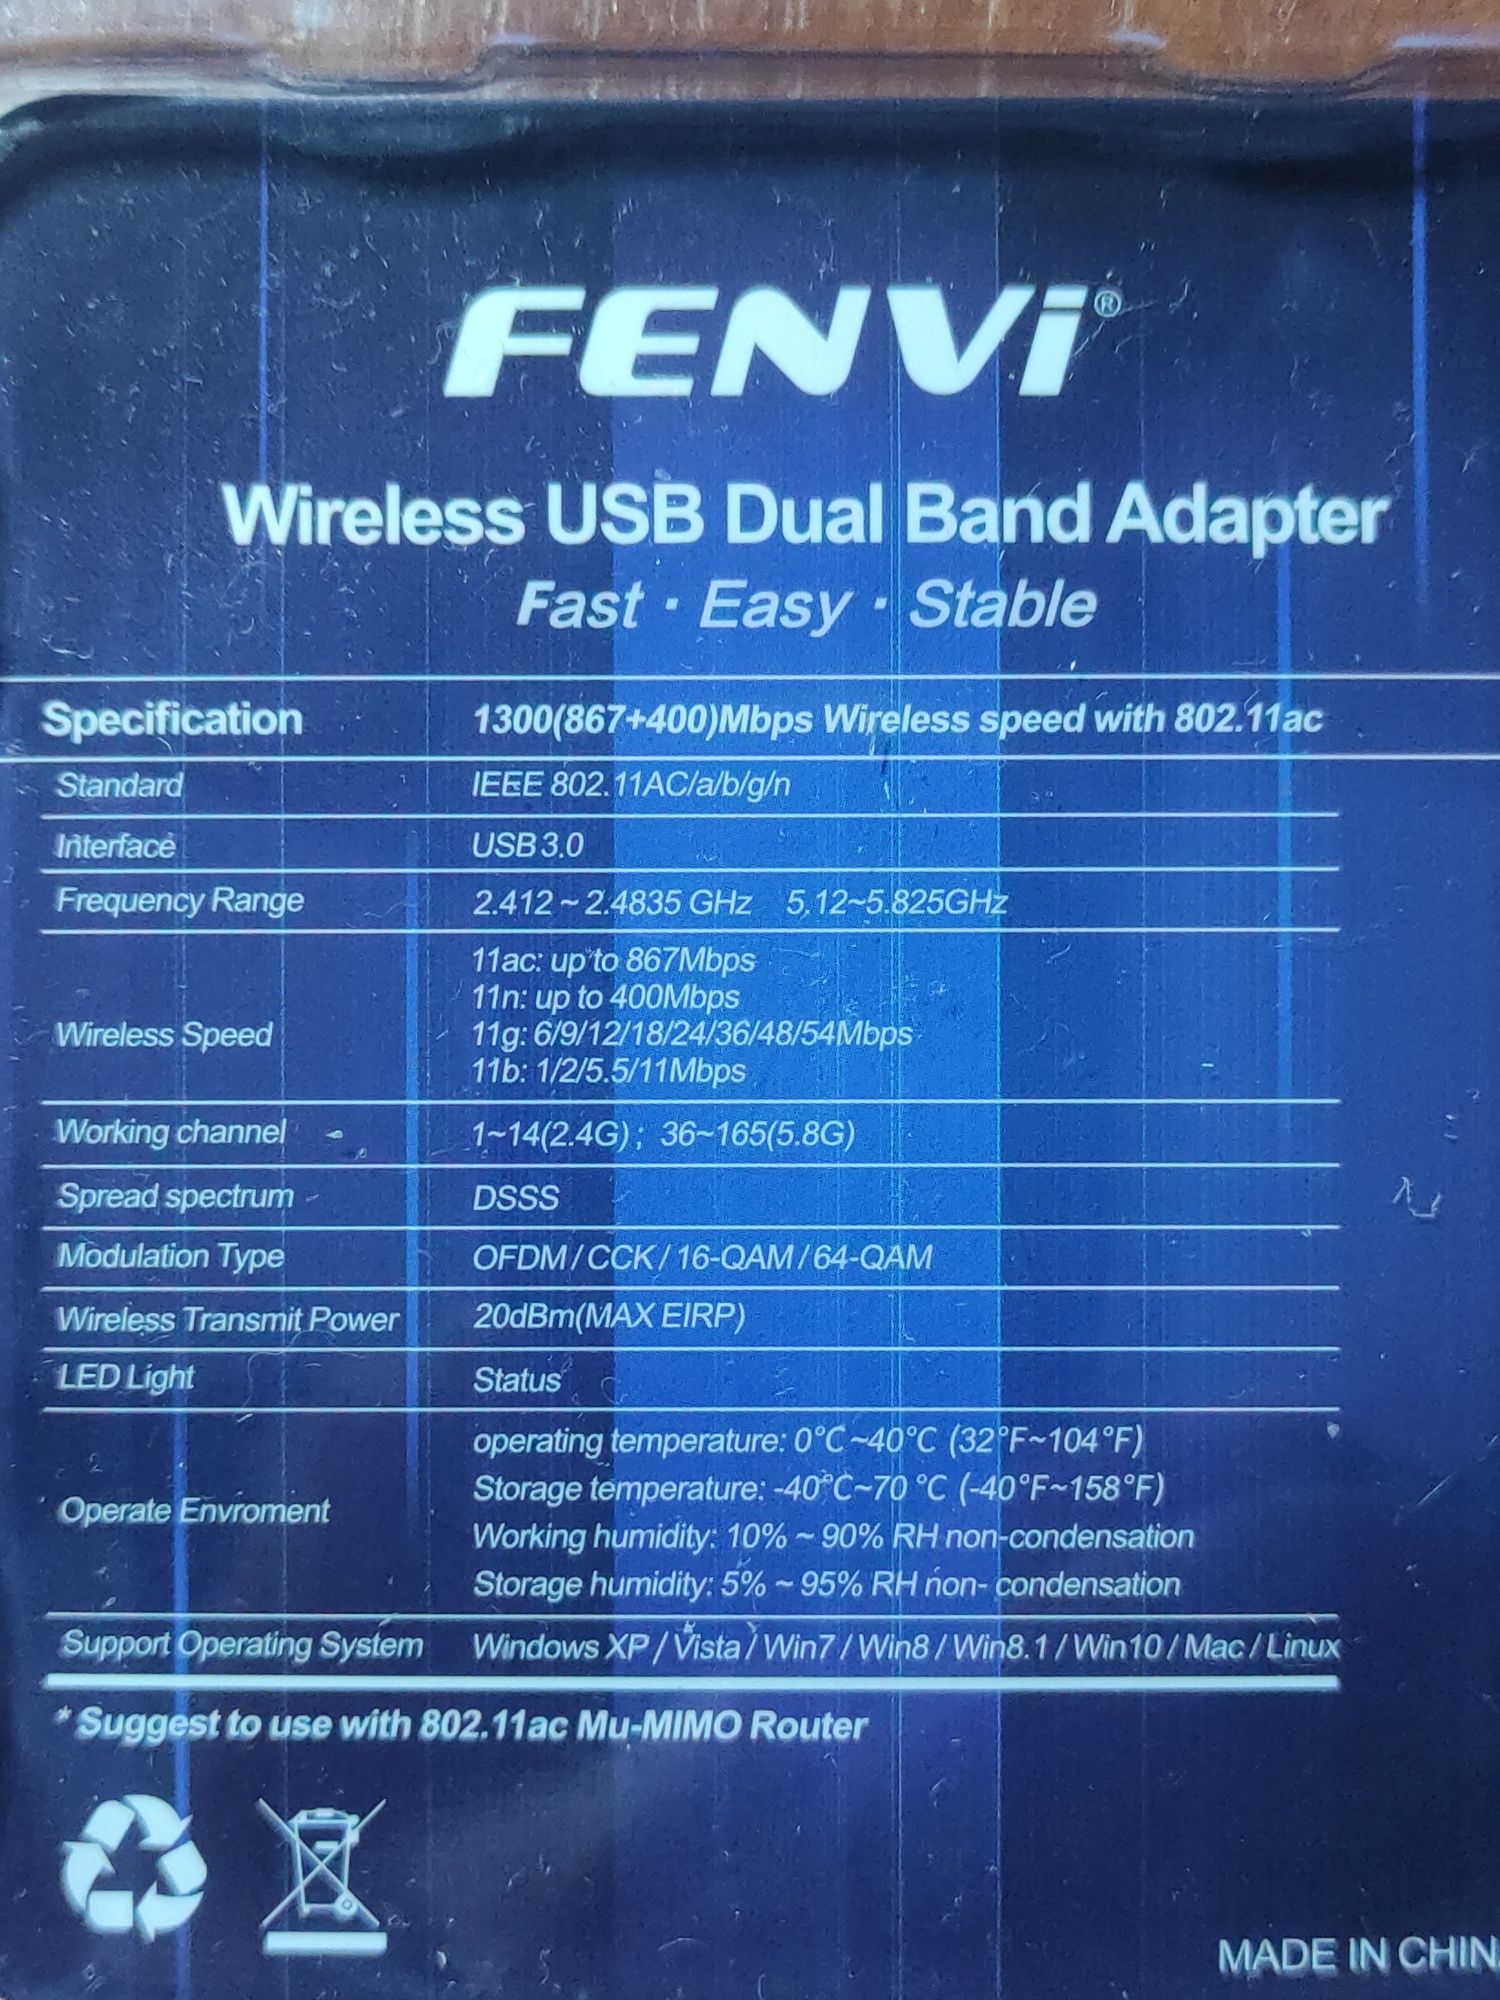 Новый двухдиапазонный USB WI-FI адаптер АС1300